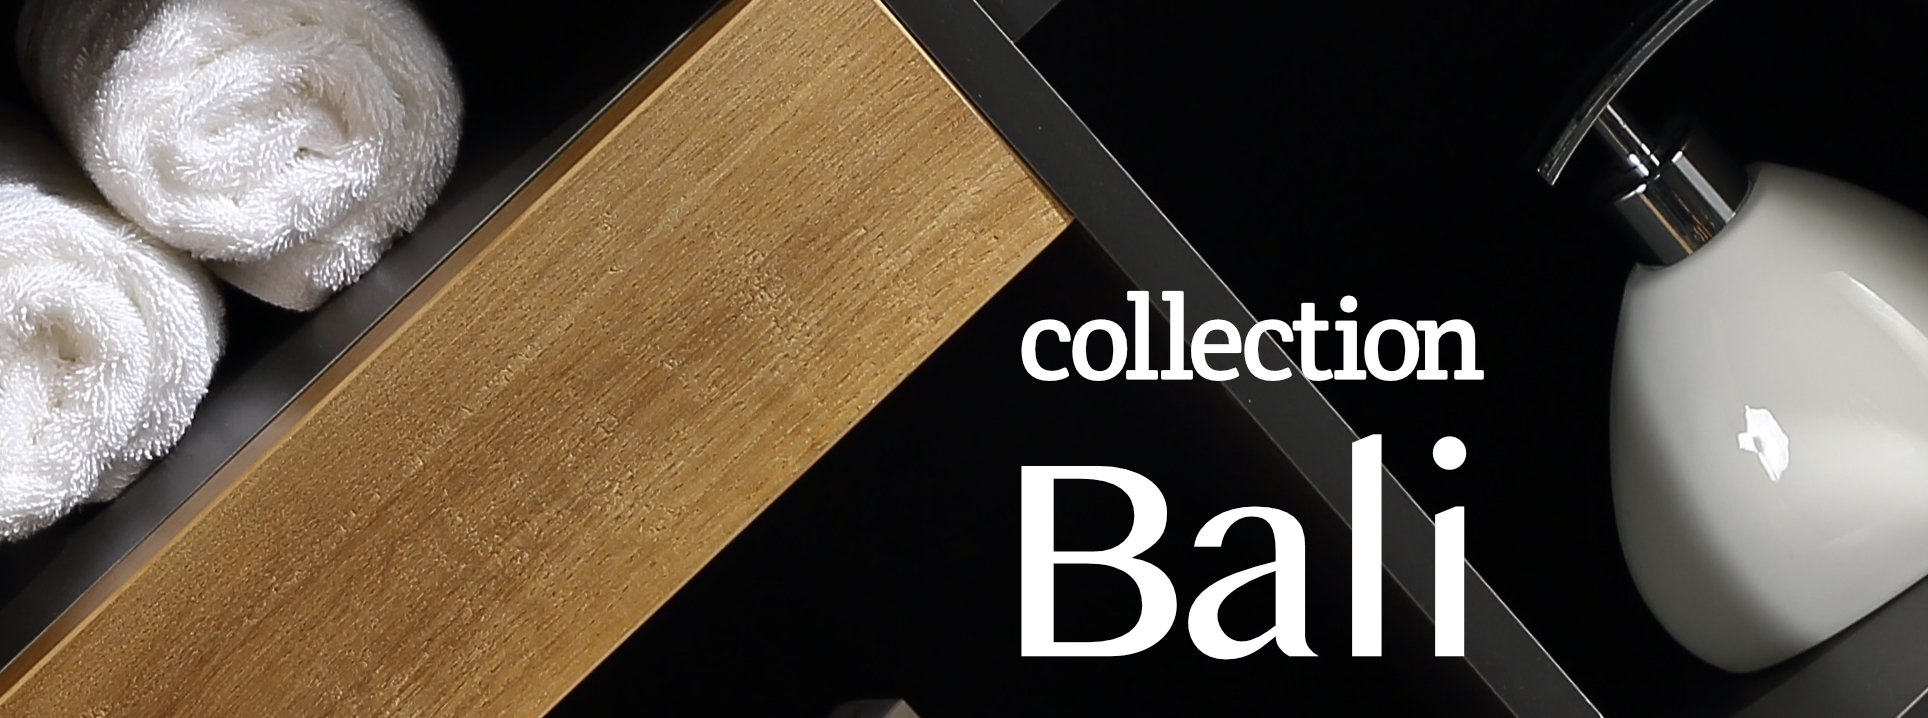 Collection Bali